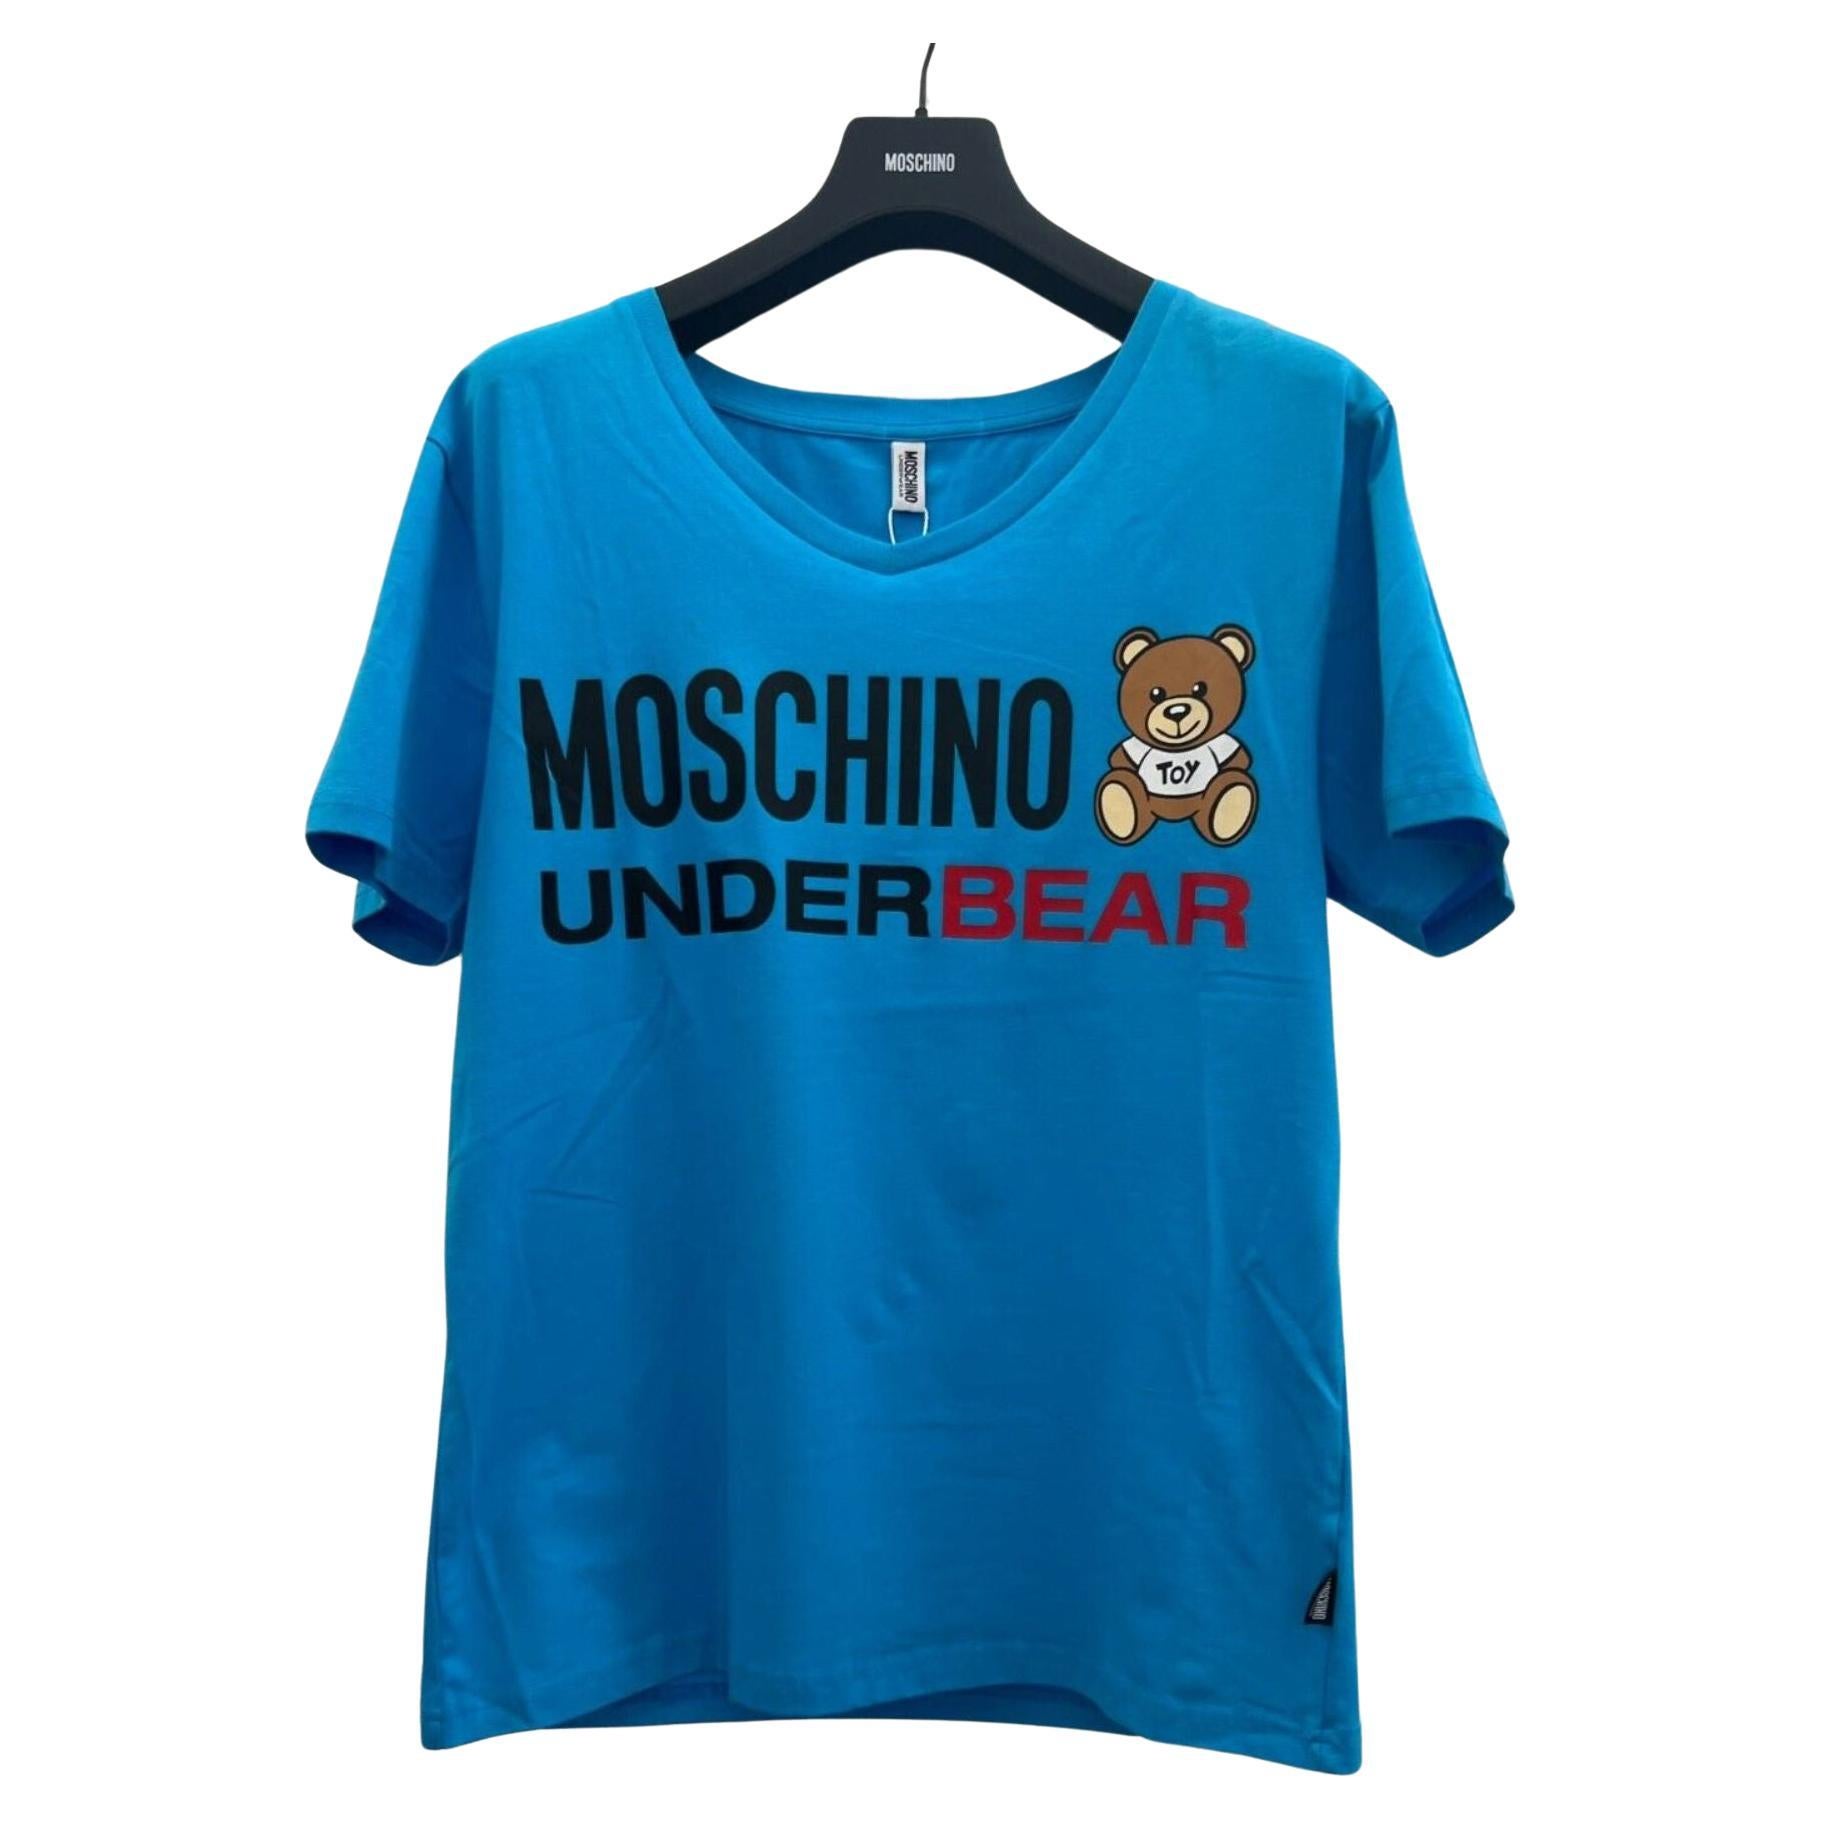 SS20 Moschino Underwear Underbear Teddy Bear T-shirt by Jeremy Scott, Size S For Sale